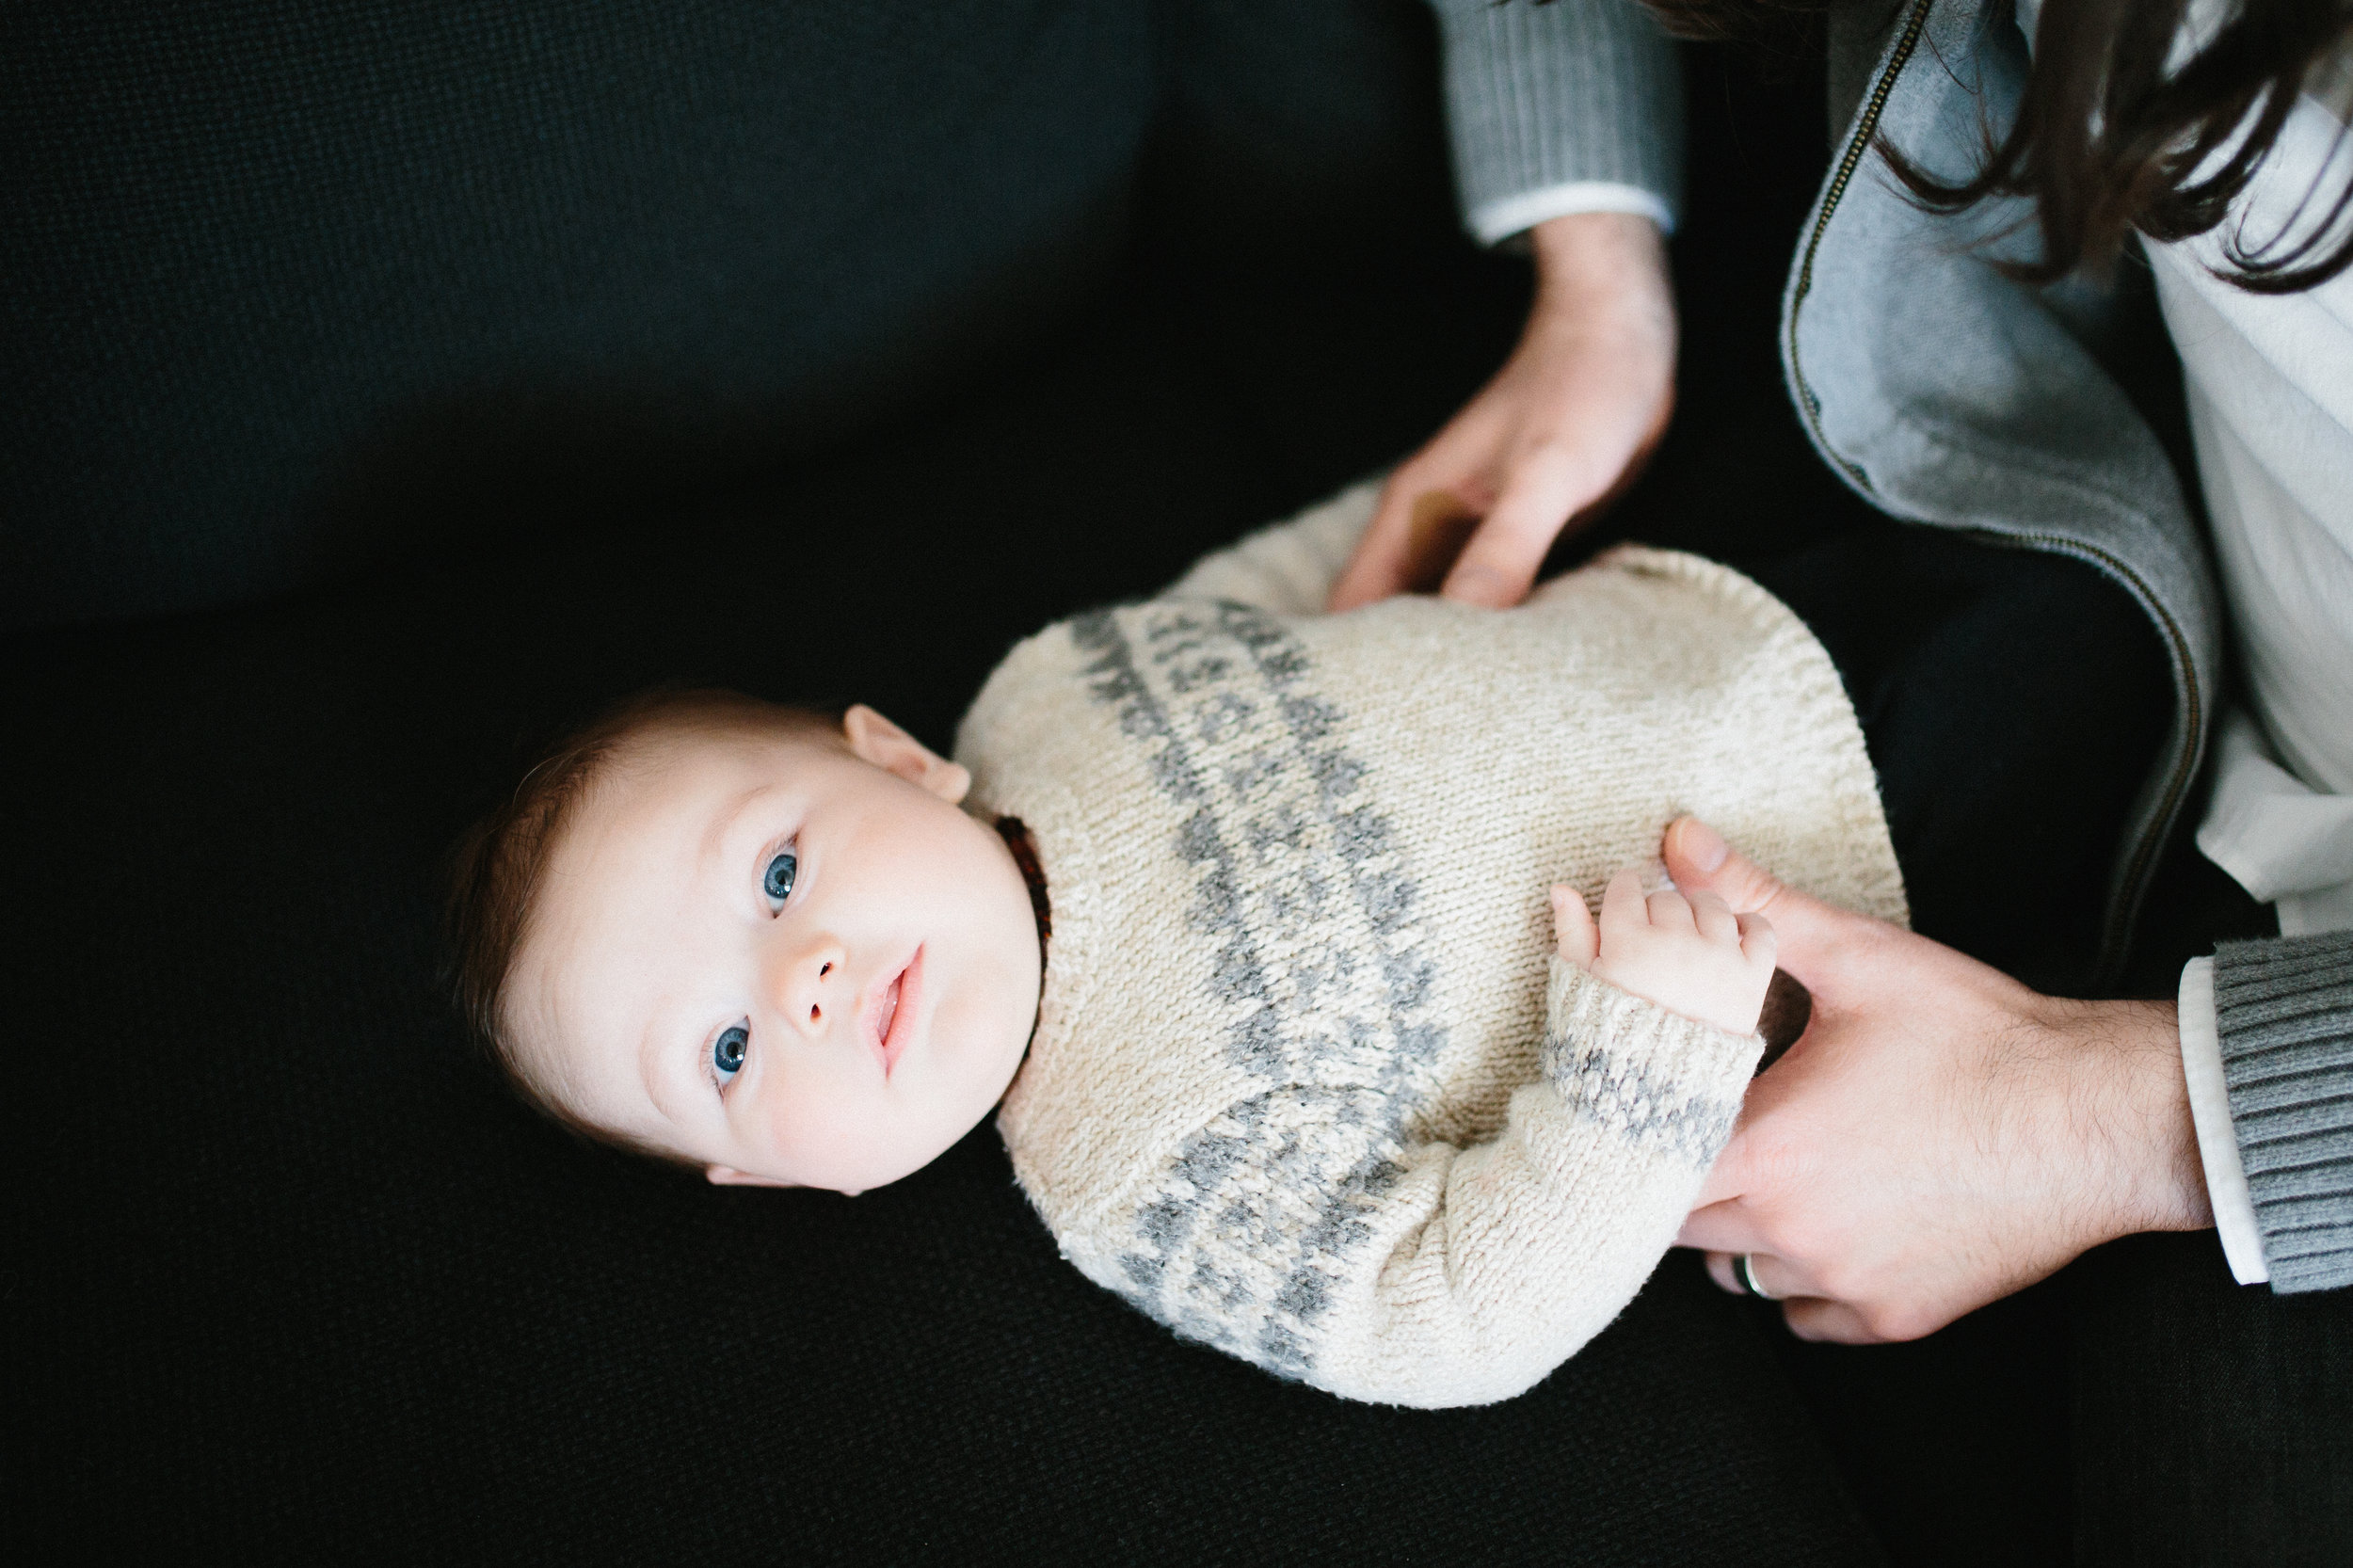 Søren's First Snow | baby photographer, family photographer | Durham, NC | Merritt Chesson Photography